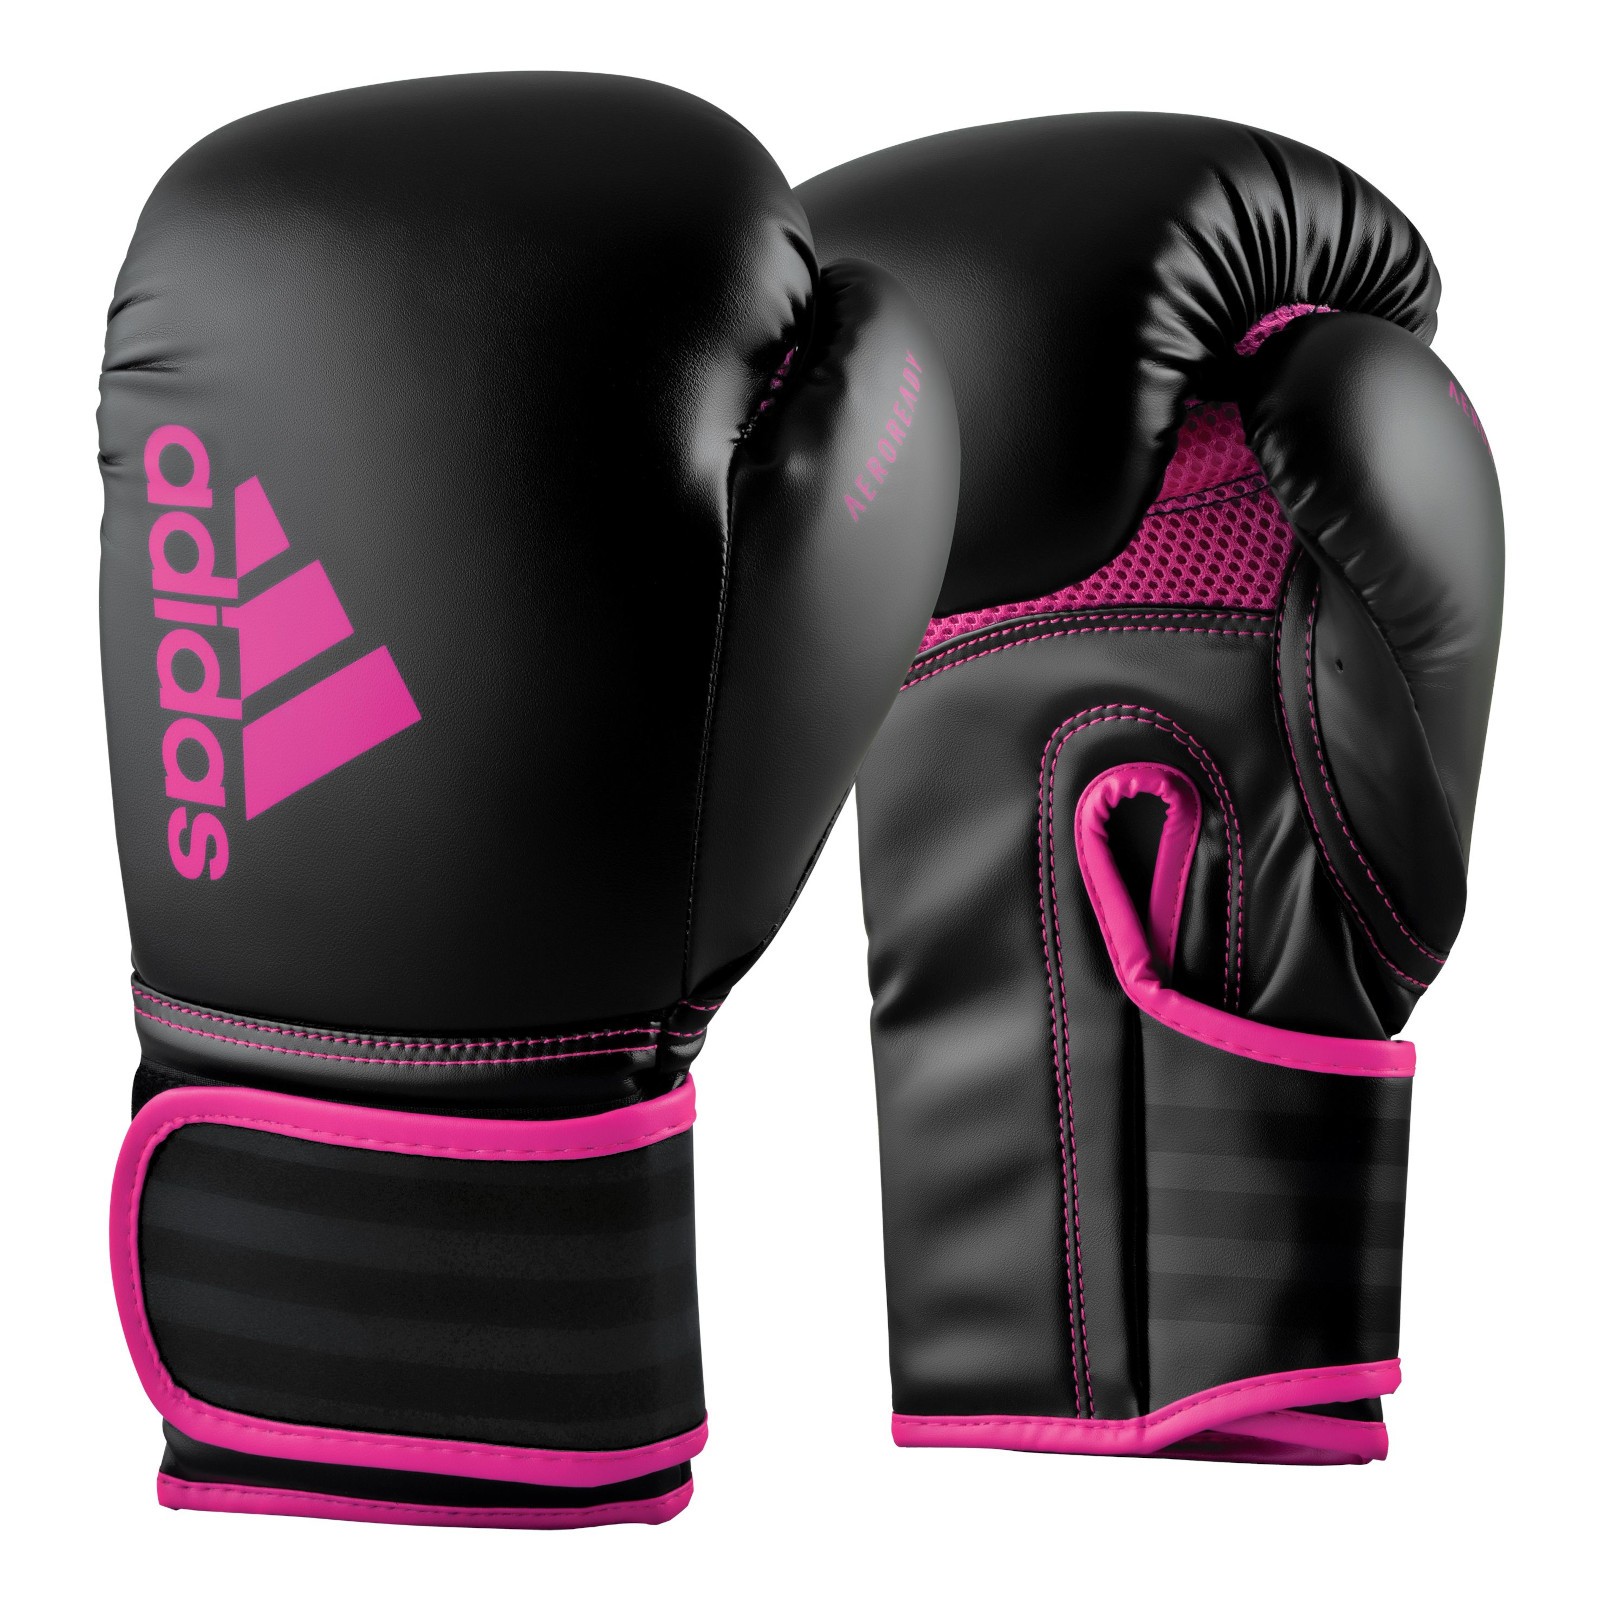 adidas Boxing Glove Hybrid 80 - Fitshop